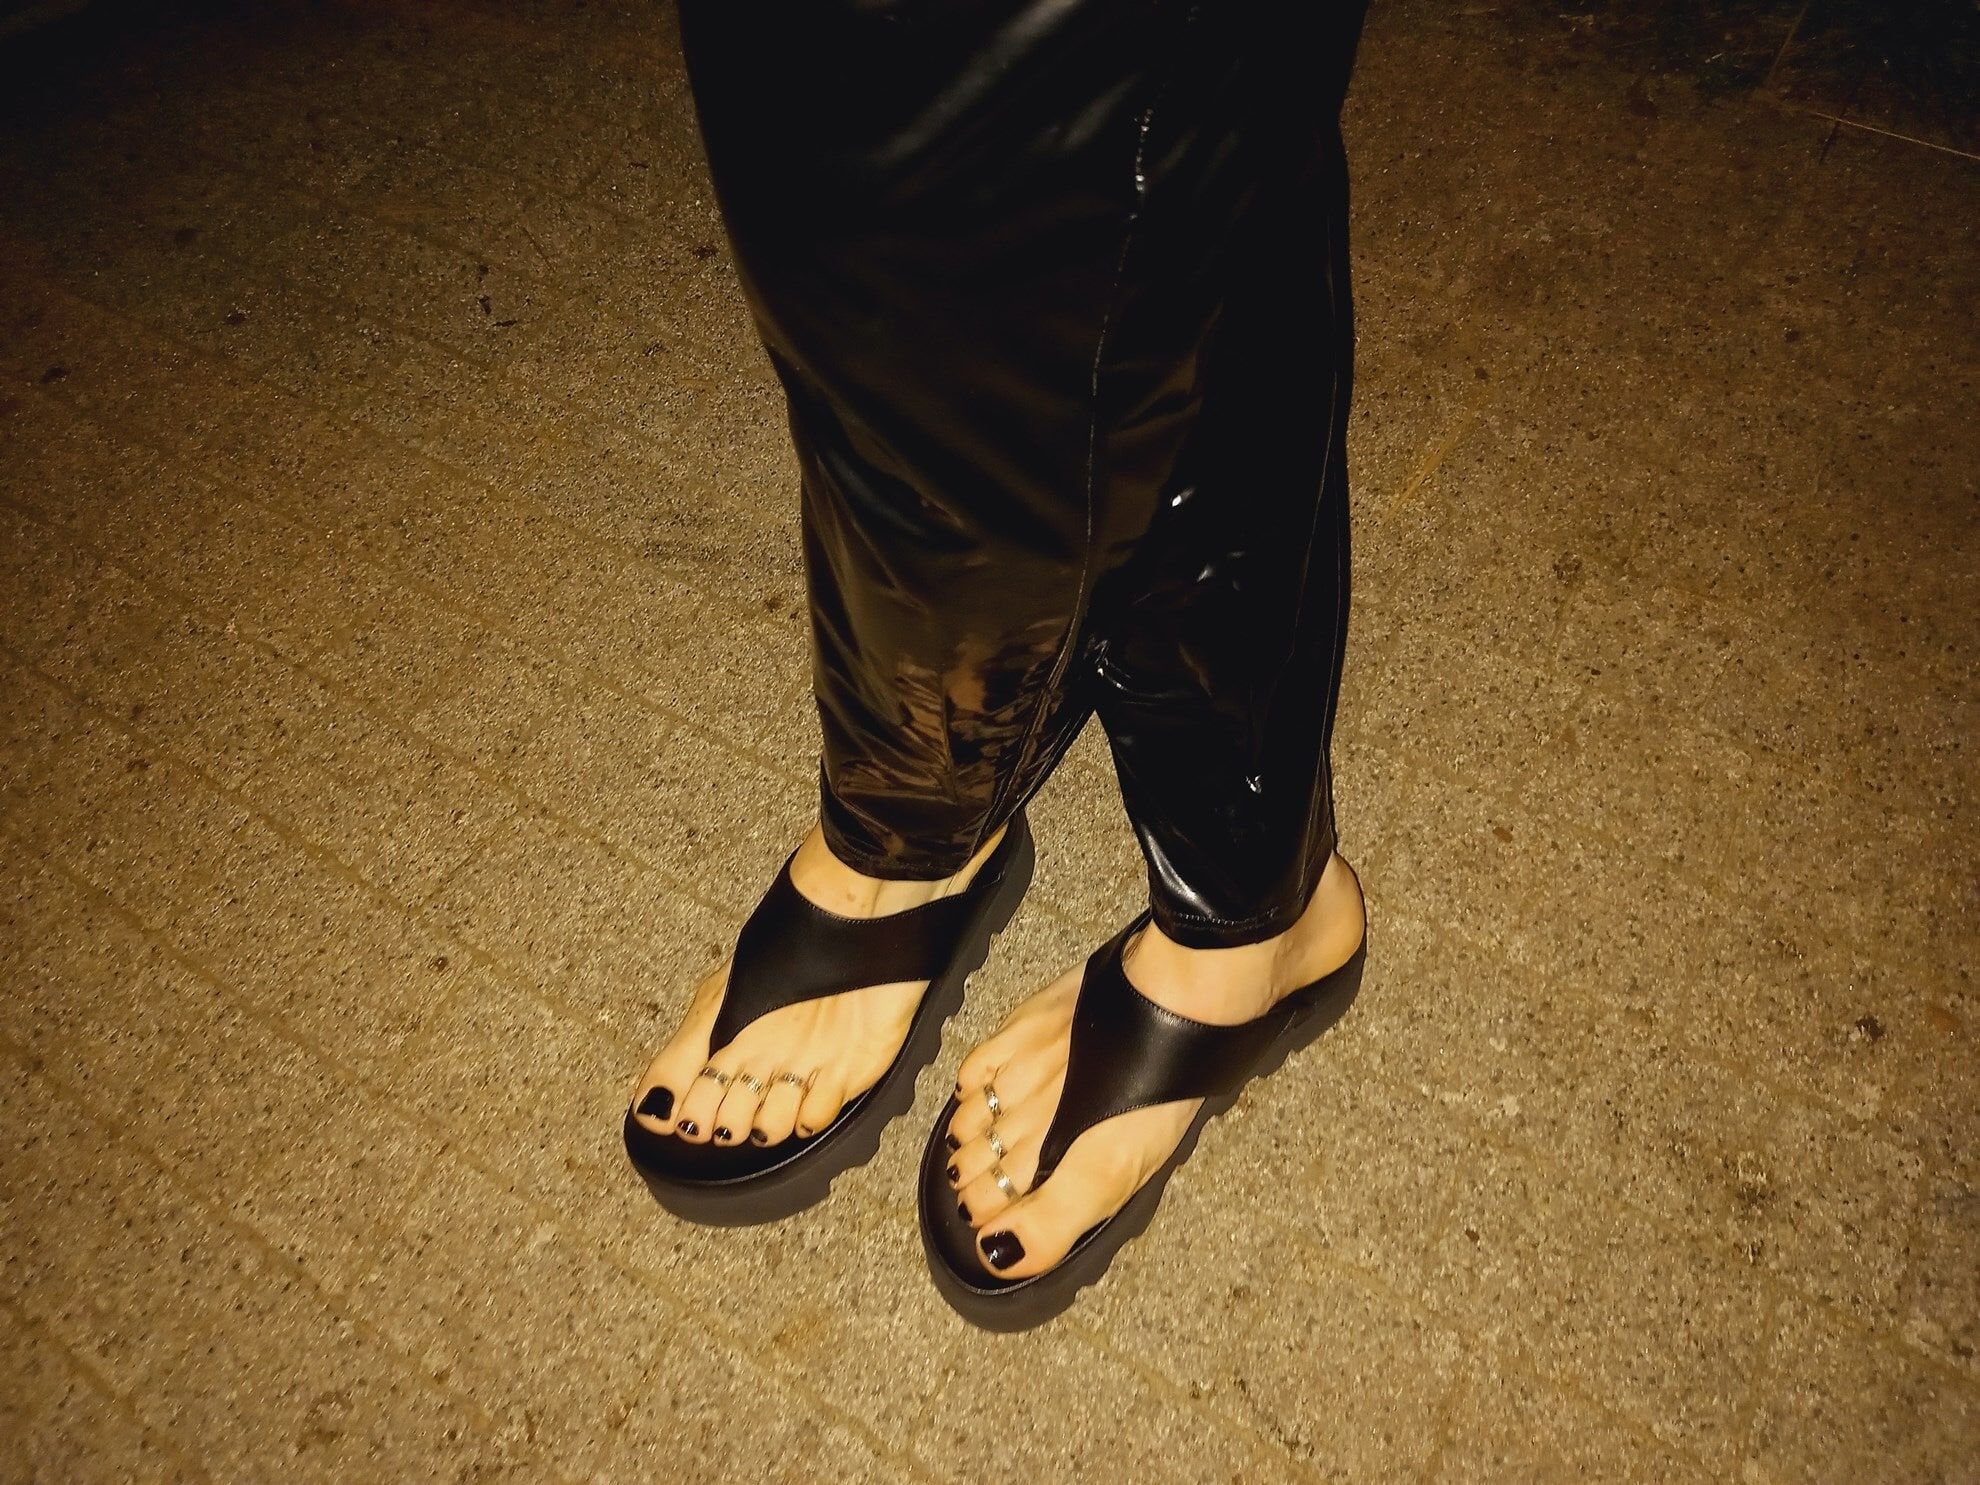 platform flip flops and latex pants #6